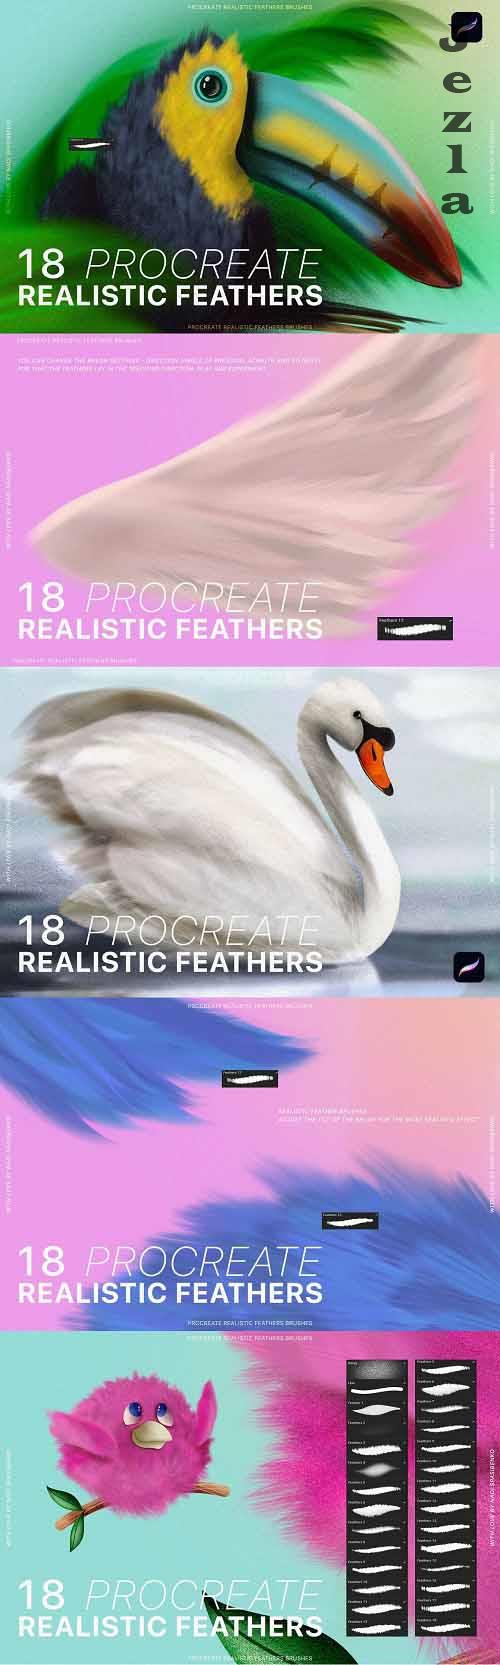 Procreate Realistic Feather Brushes - 6802309